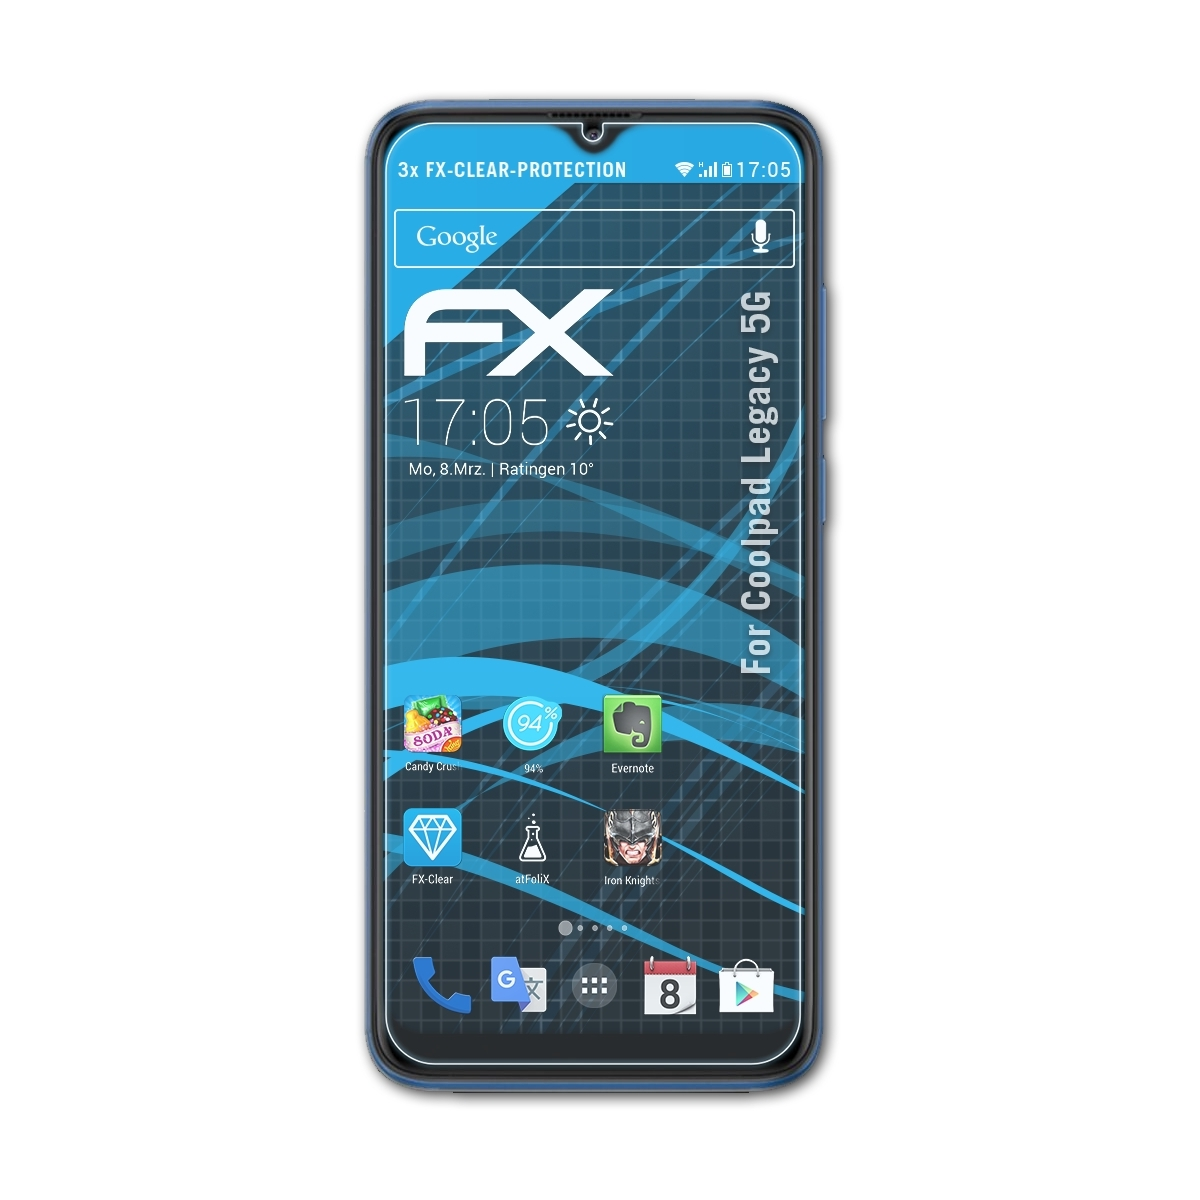 ATFOLIX 3x FX-Clear Displayschutz(für Coolpad Legacy 5G)